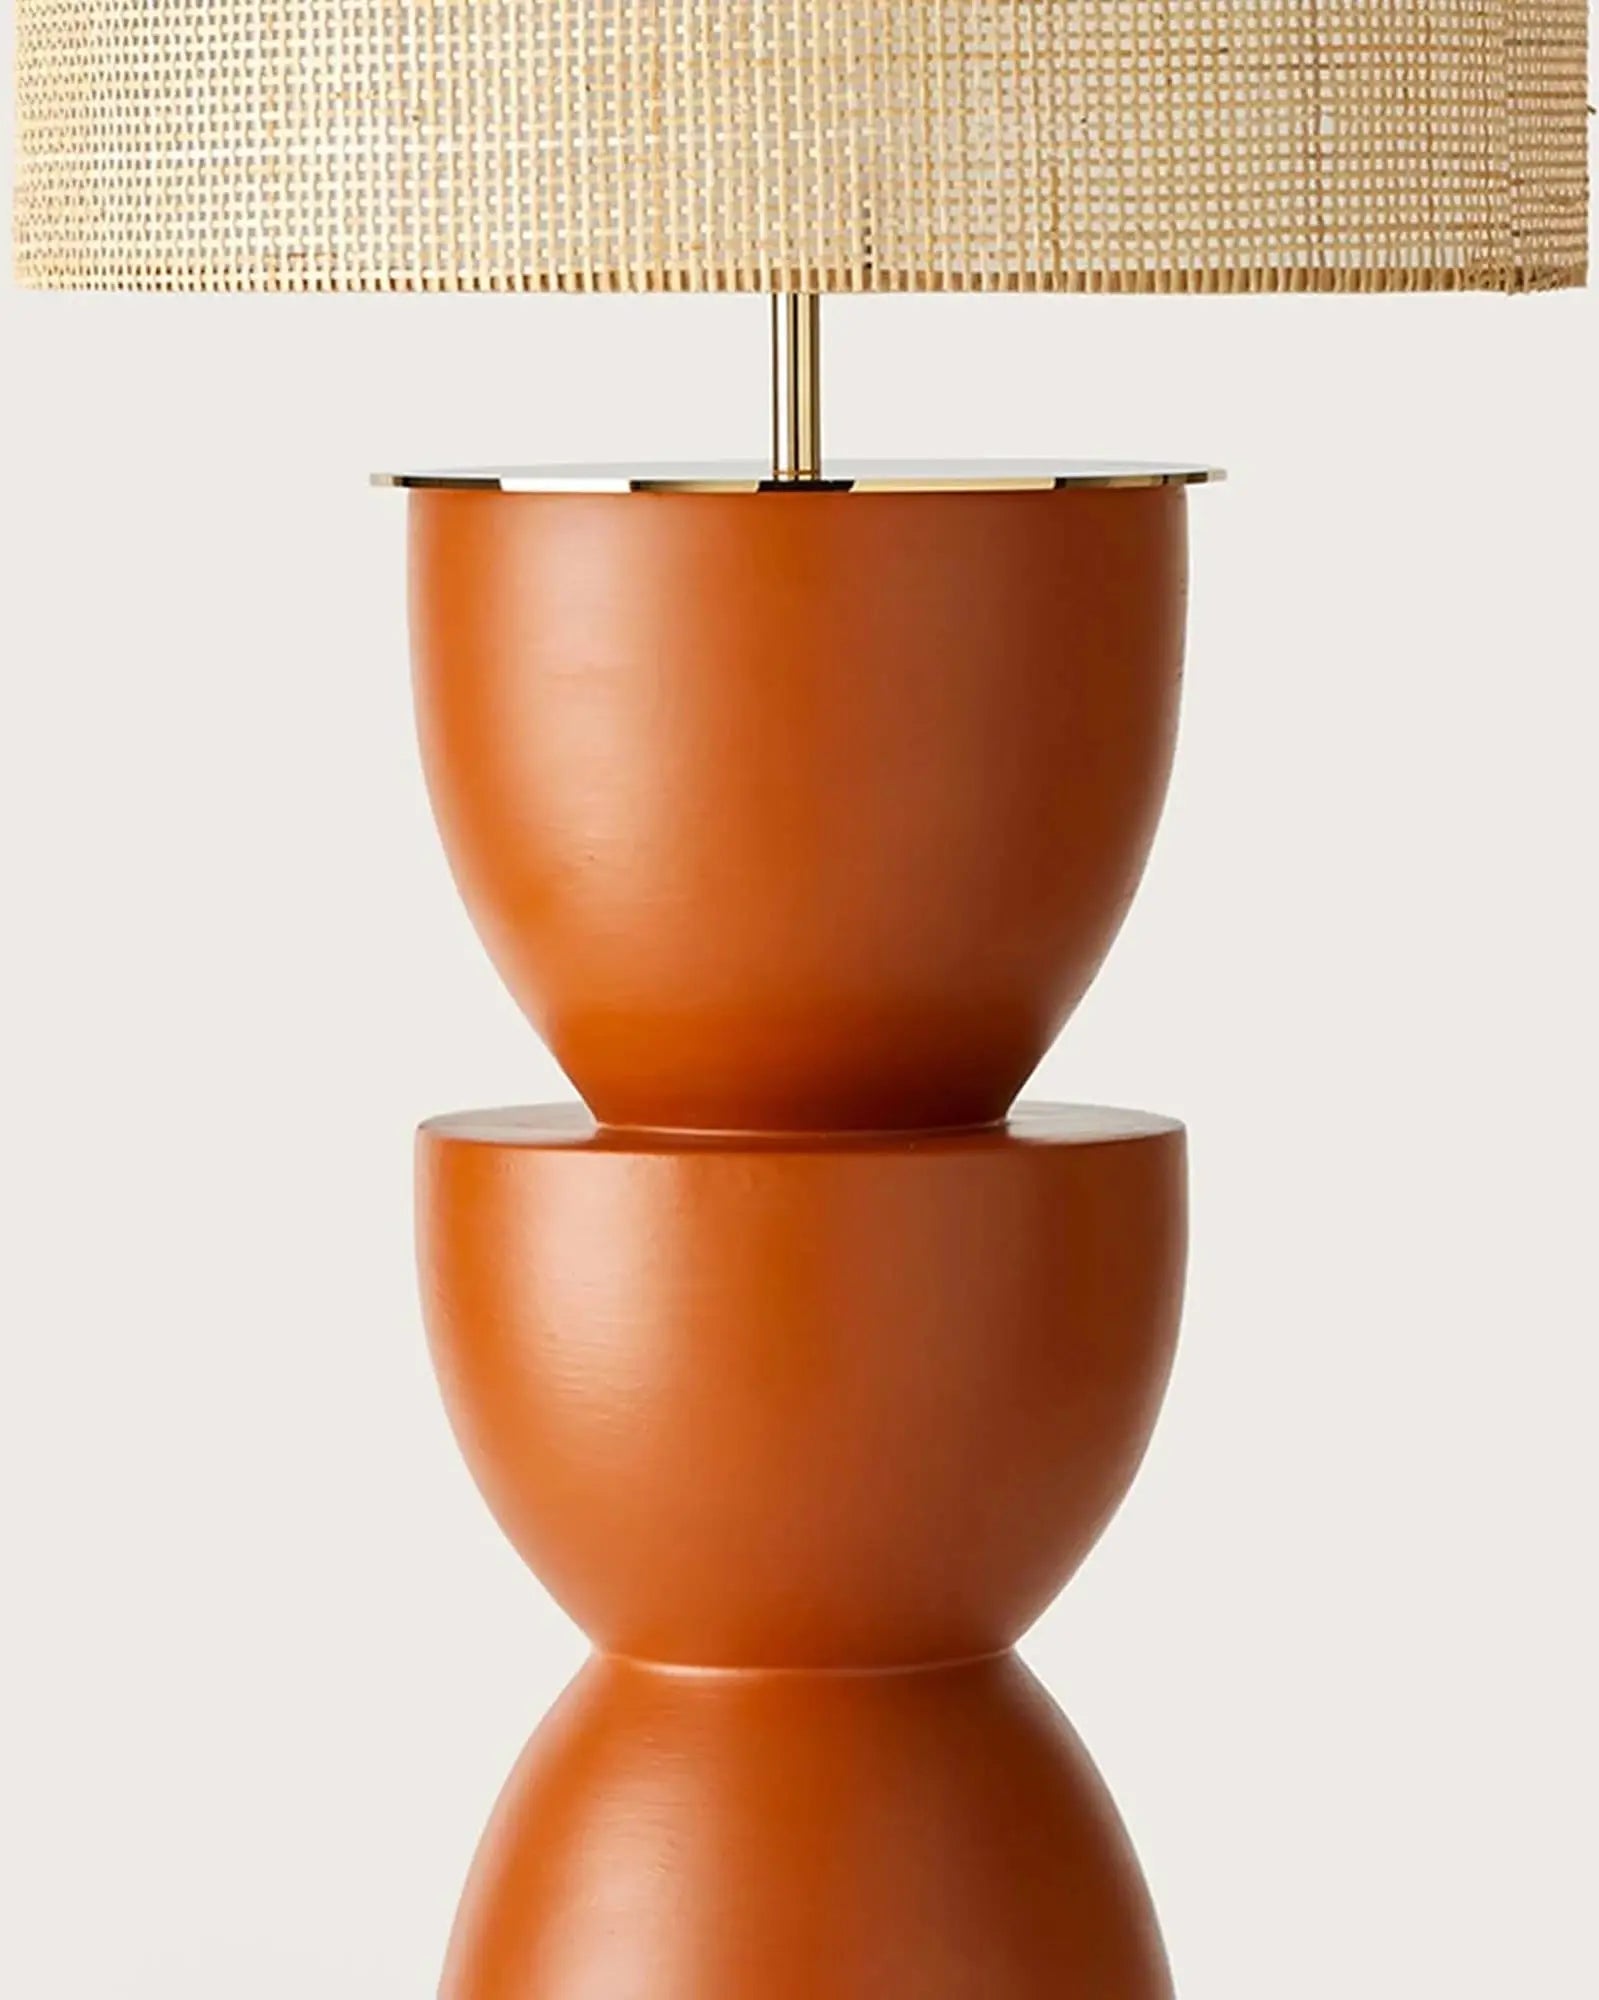 Metric Ceramic and fabric shade decorative table lamp detail